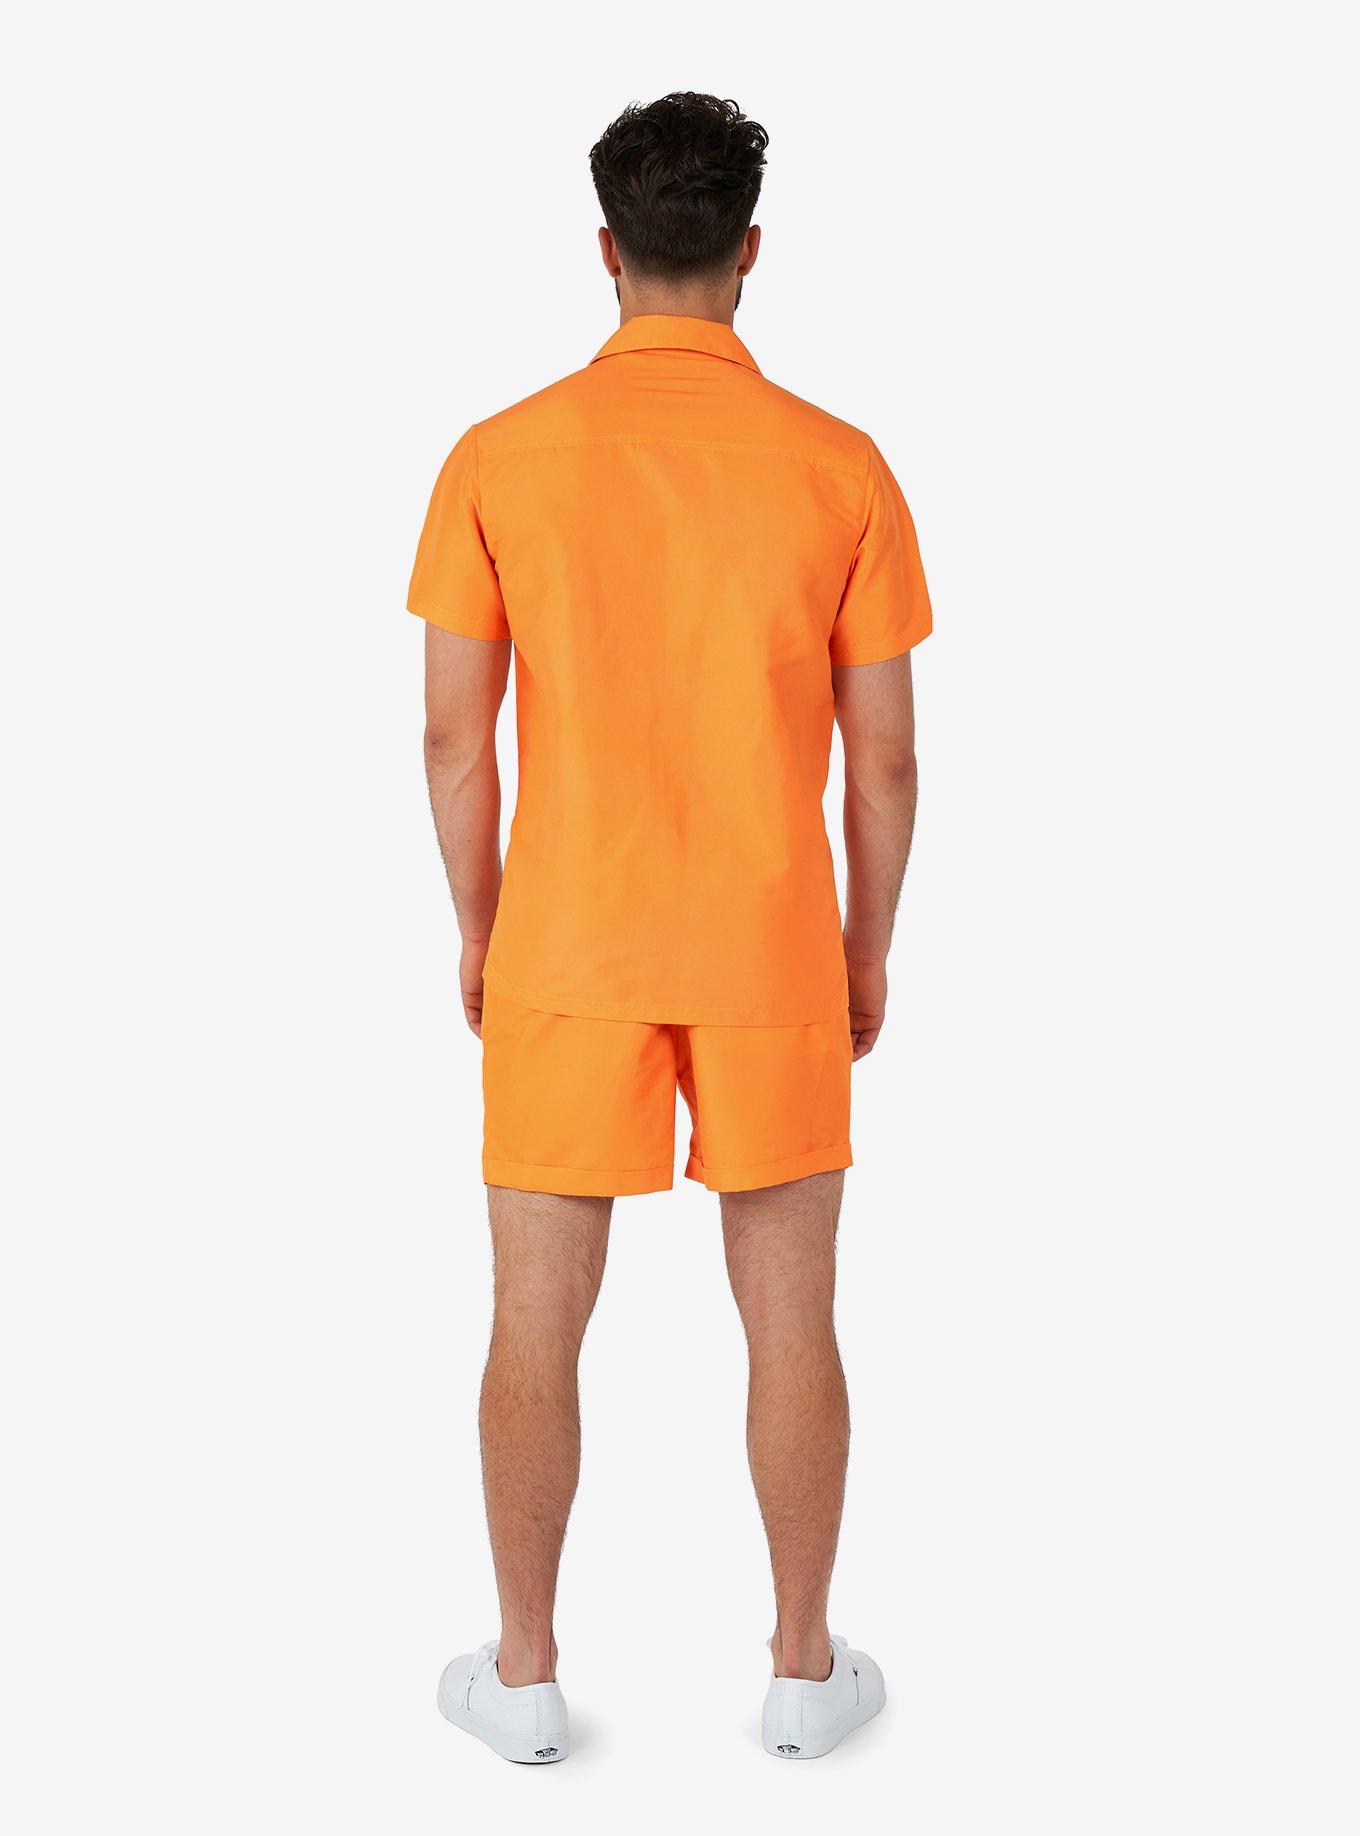 The Orange Summer Button-Up Shirt and Short, ORANGE, alternate